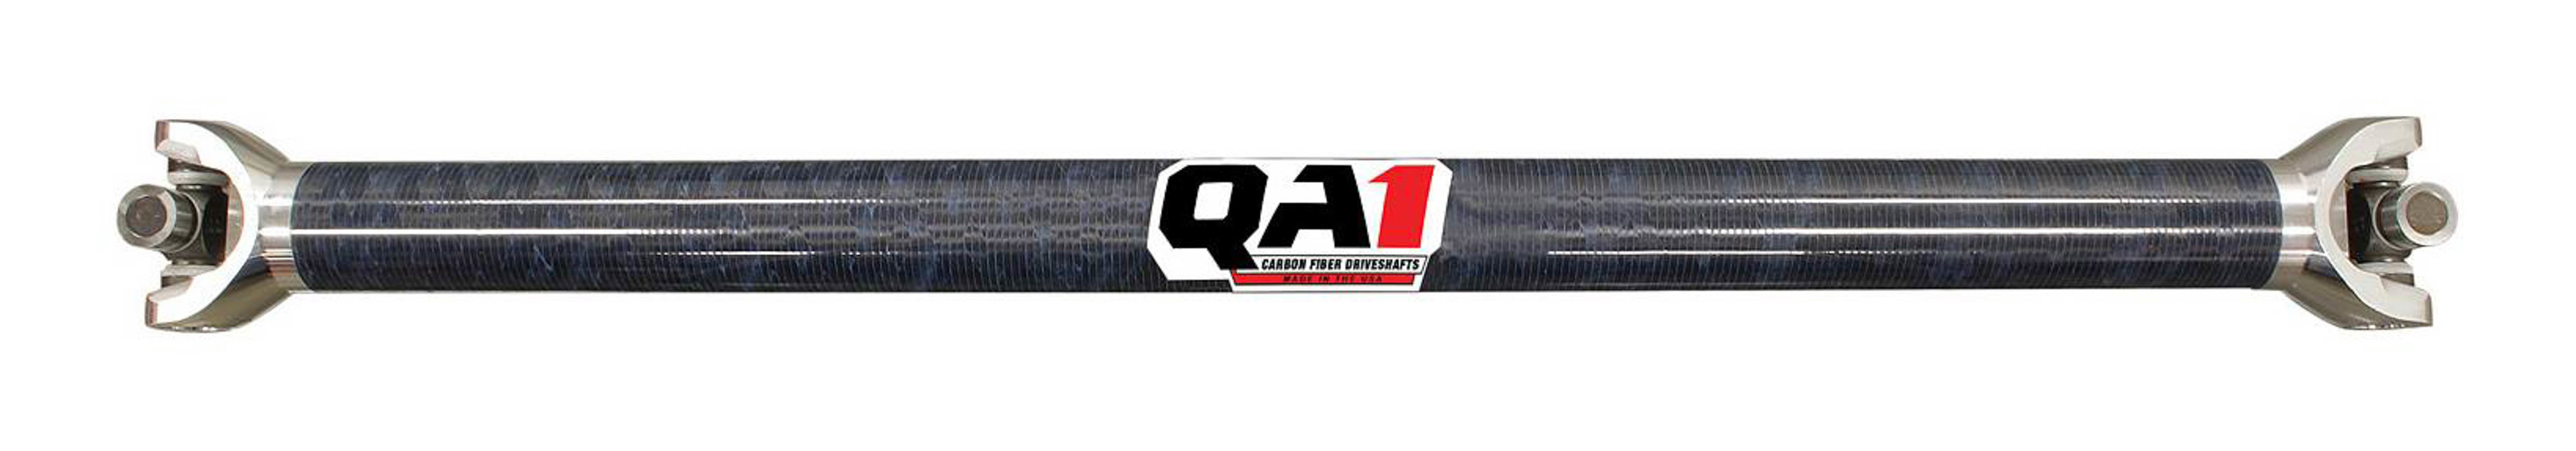 QA1 JJ-11272 Drive Shaft, Dirt Late Model Traction Twist, 37 in Long, 2.25 in OD, 1310 U-Joints, Carbon Fiber, Universal, Each